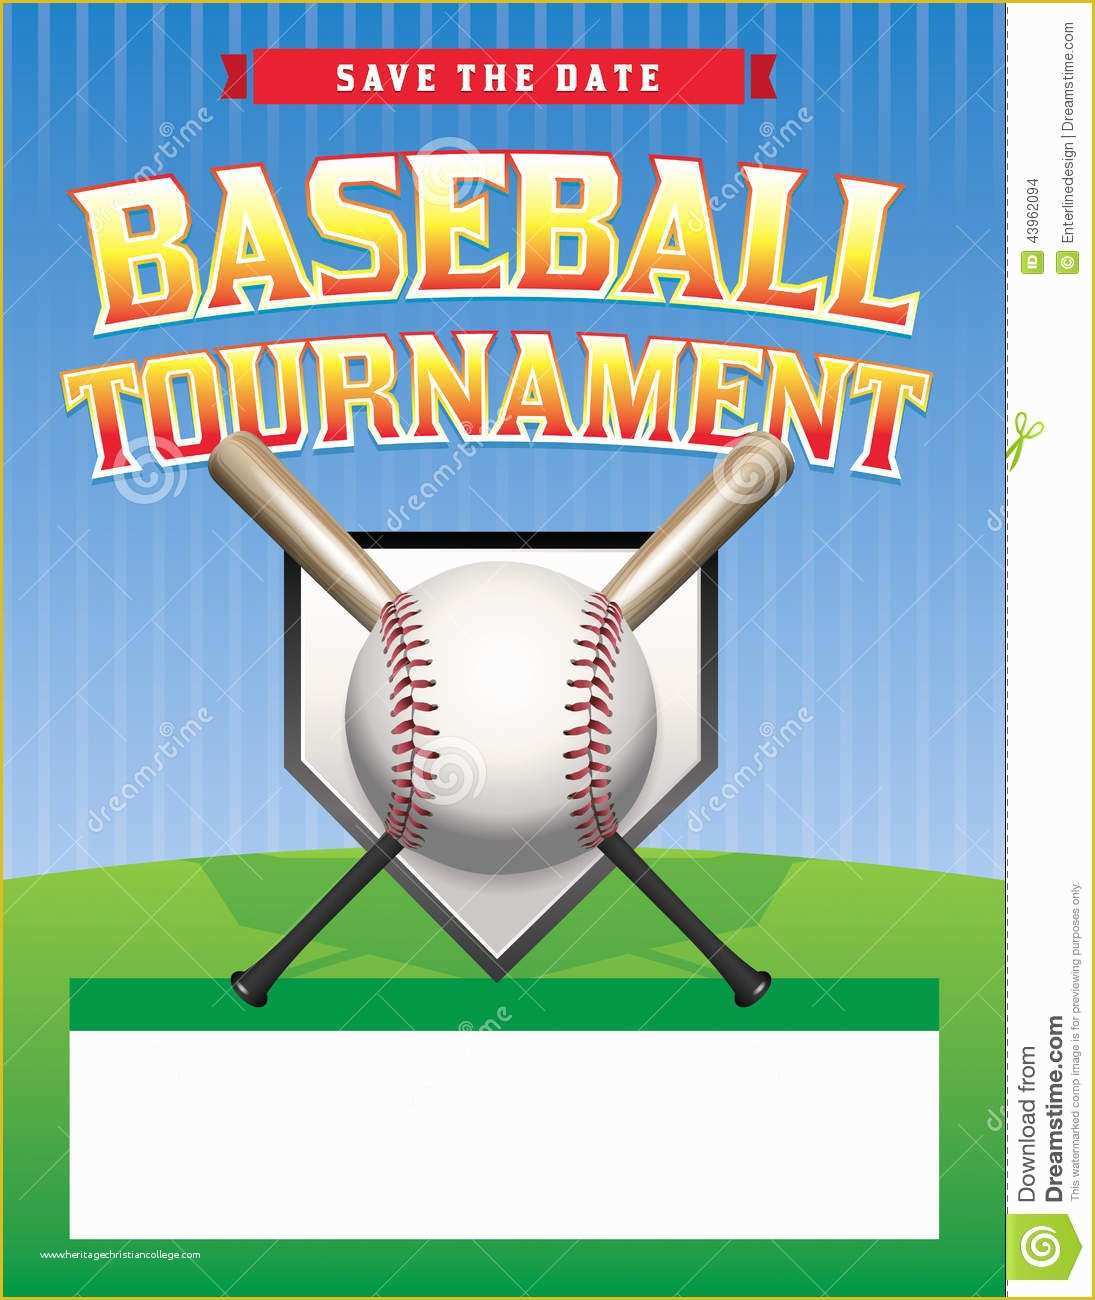 Free Baseball tournament Flyer Template Of Baseball tournament Illustration Stock Vector Image